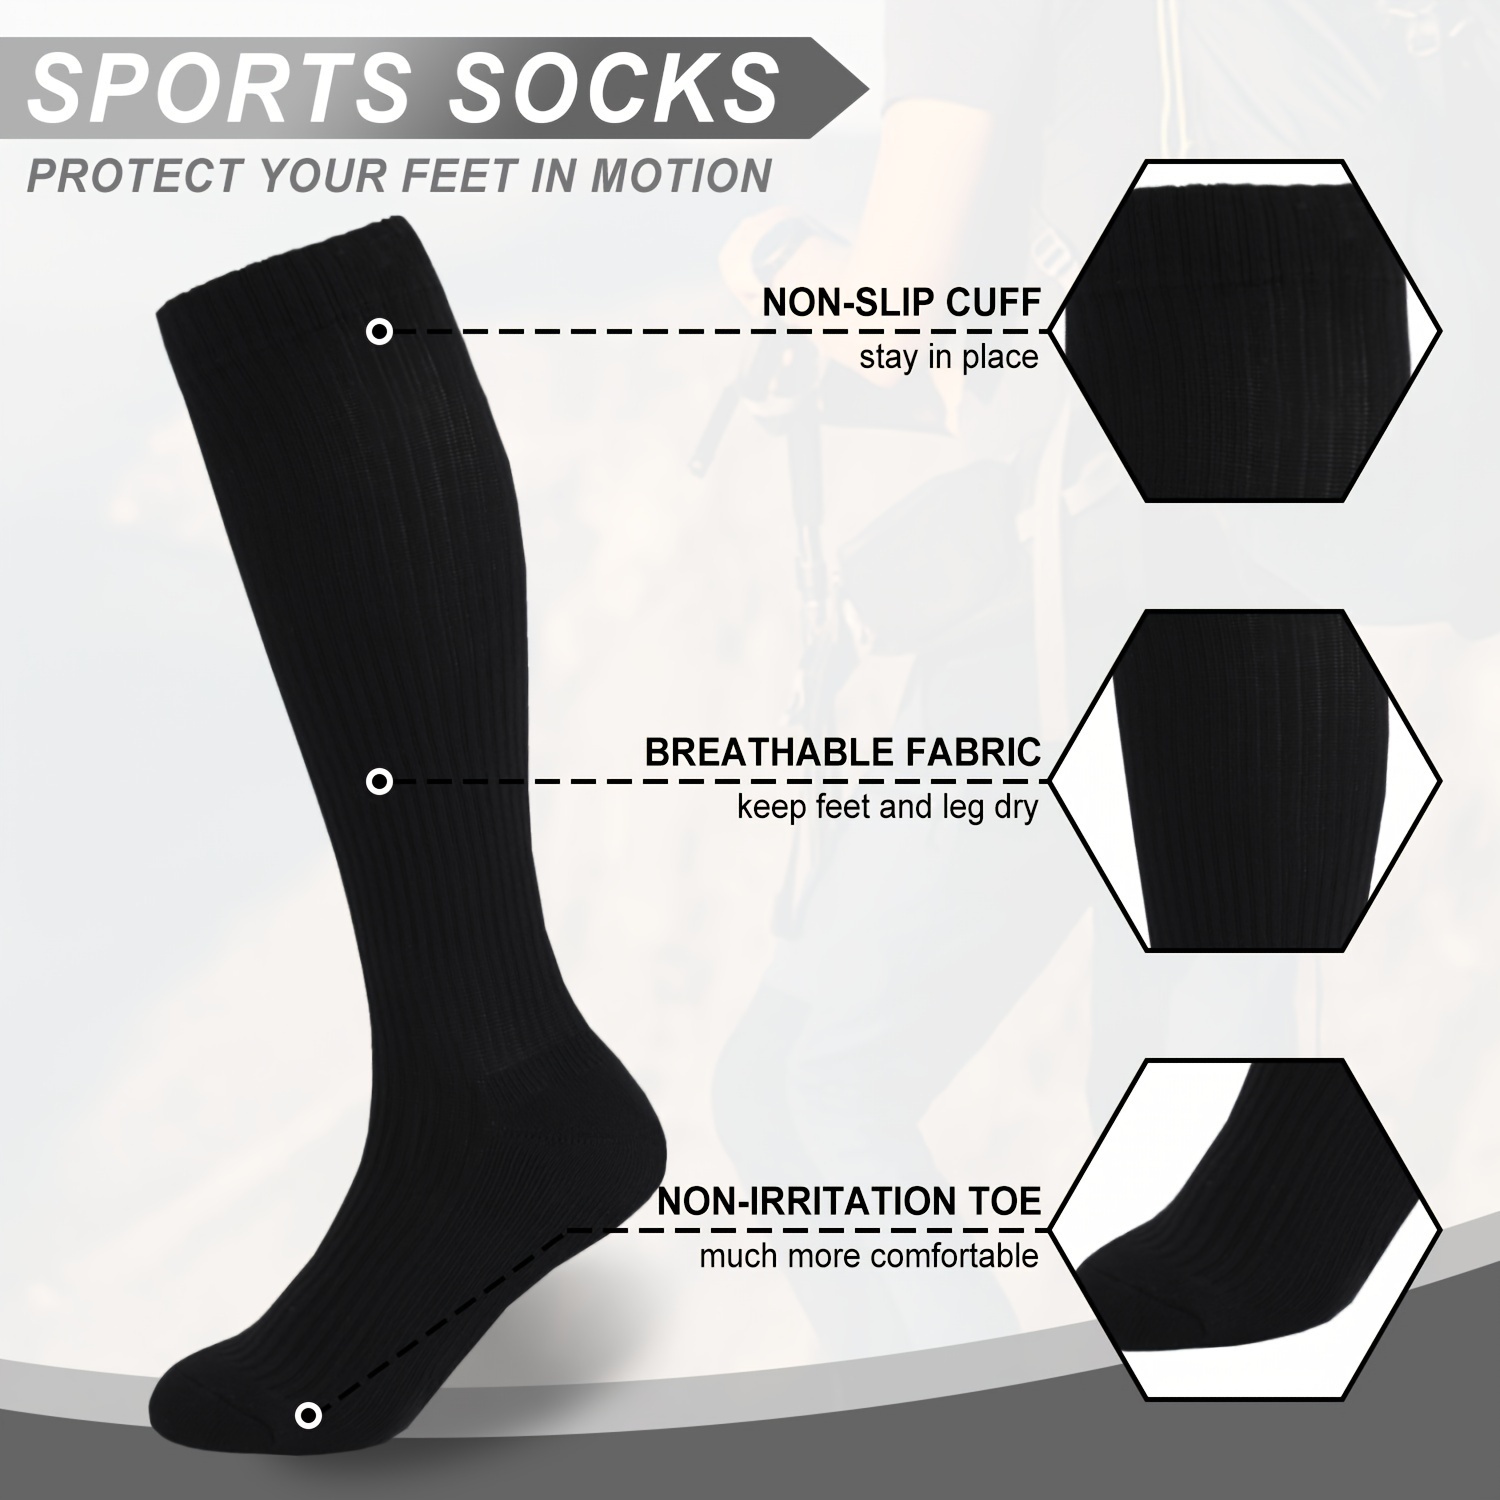 Stay Warm with Compression Socks